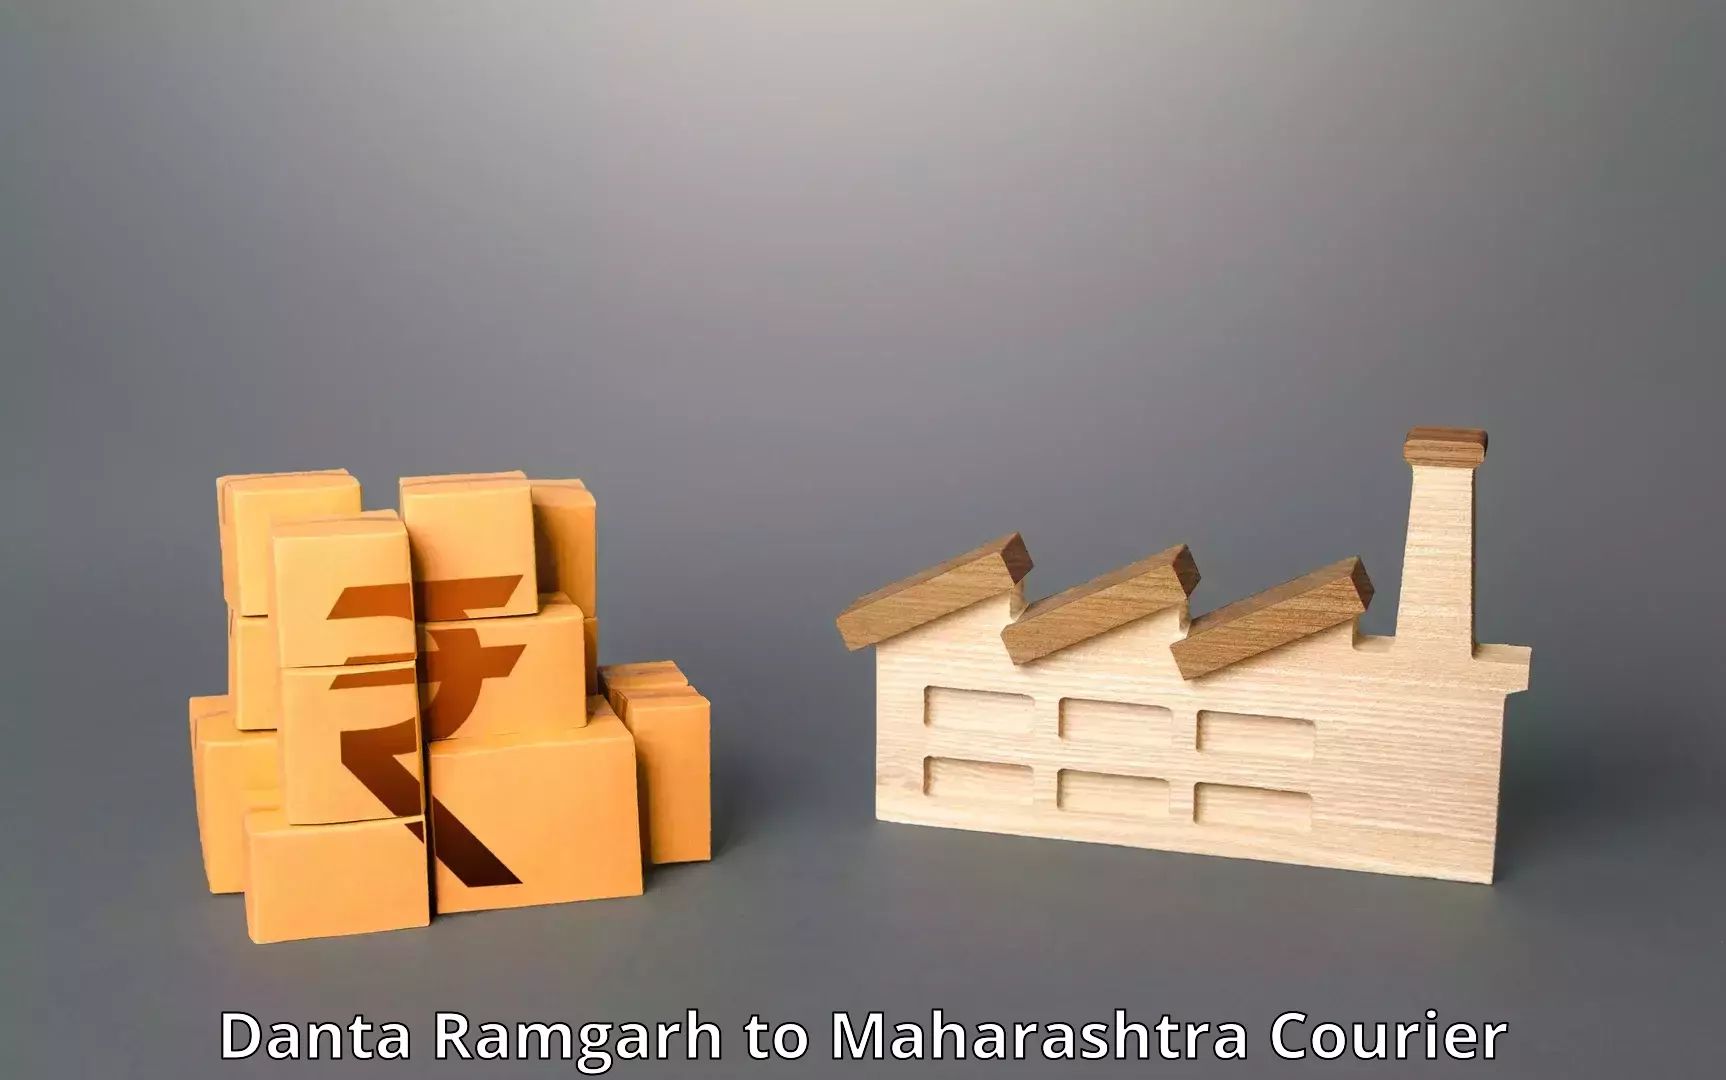 Courier service comparison Danta Ramgarh to Maharashtra